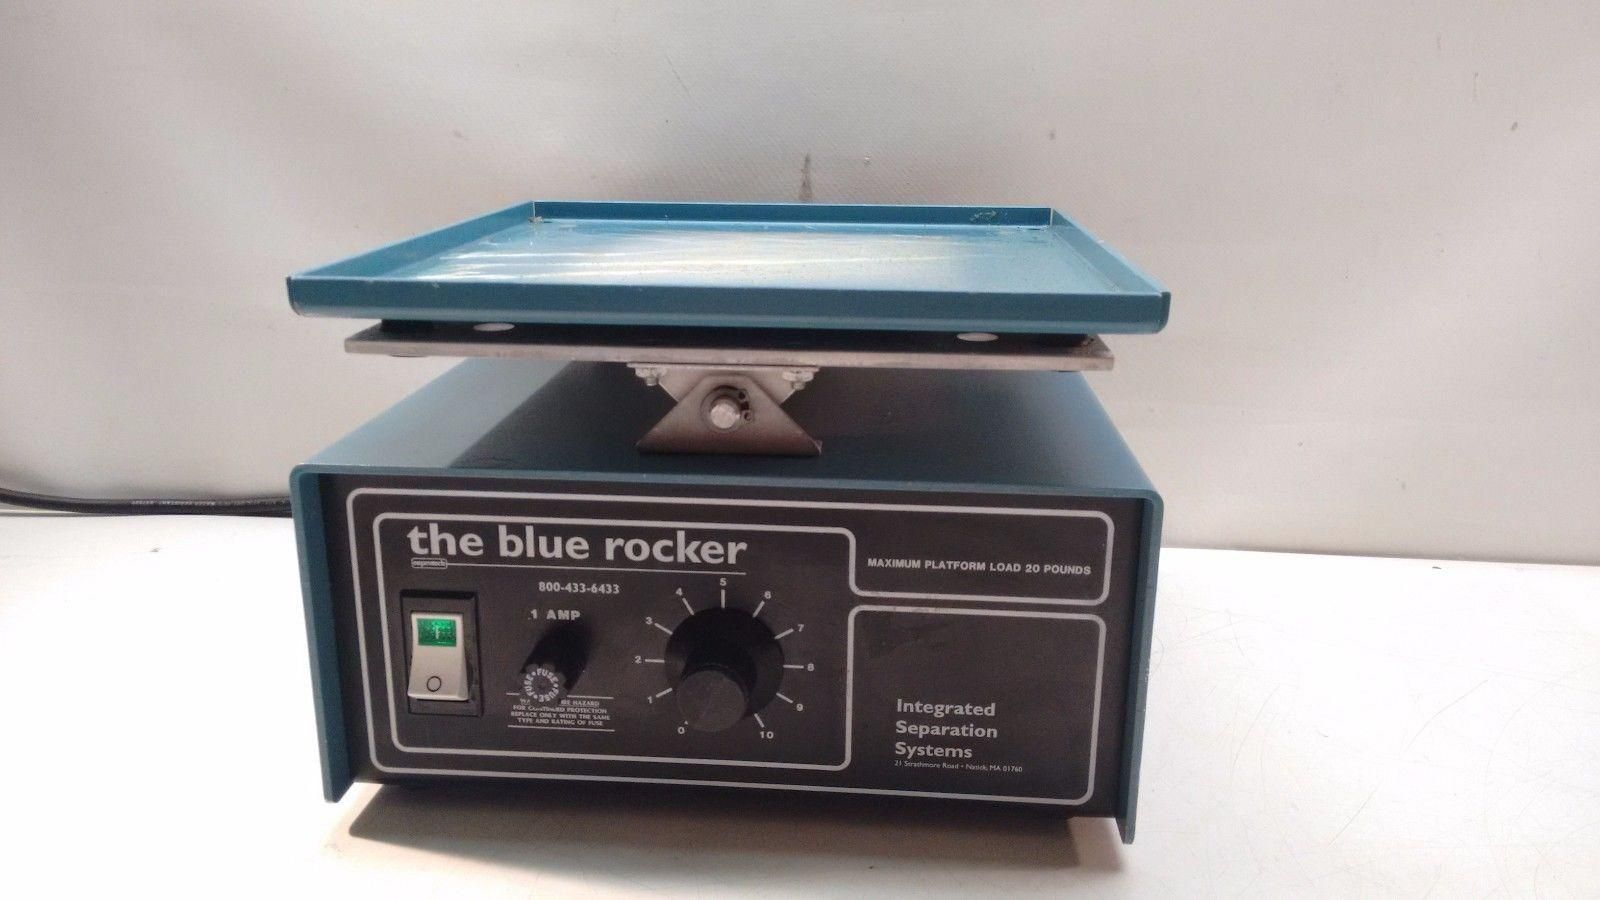 Enprotech The Blue Rocker Rocking Platform Shaker Model 800-433-6433